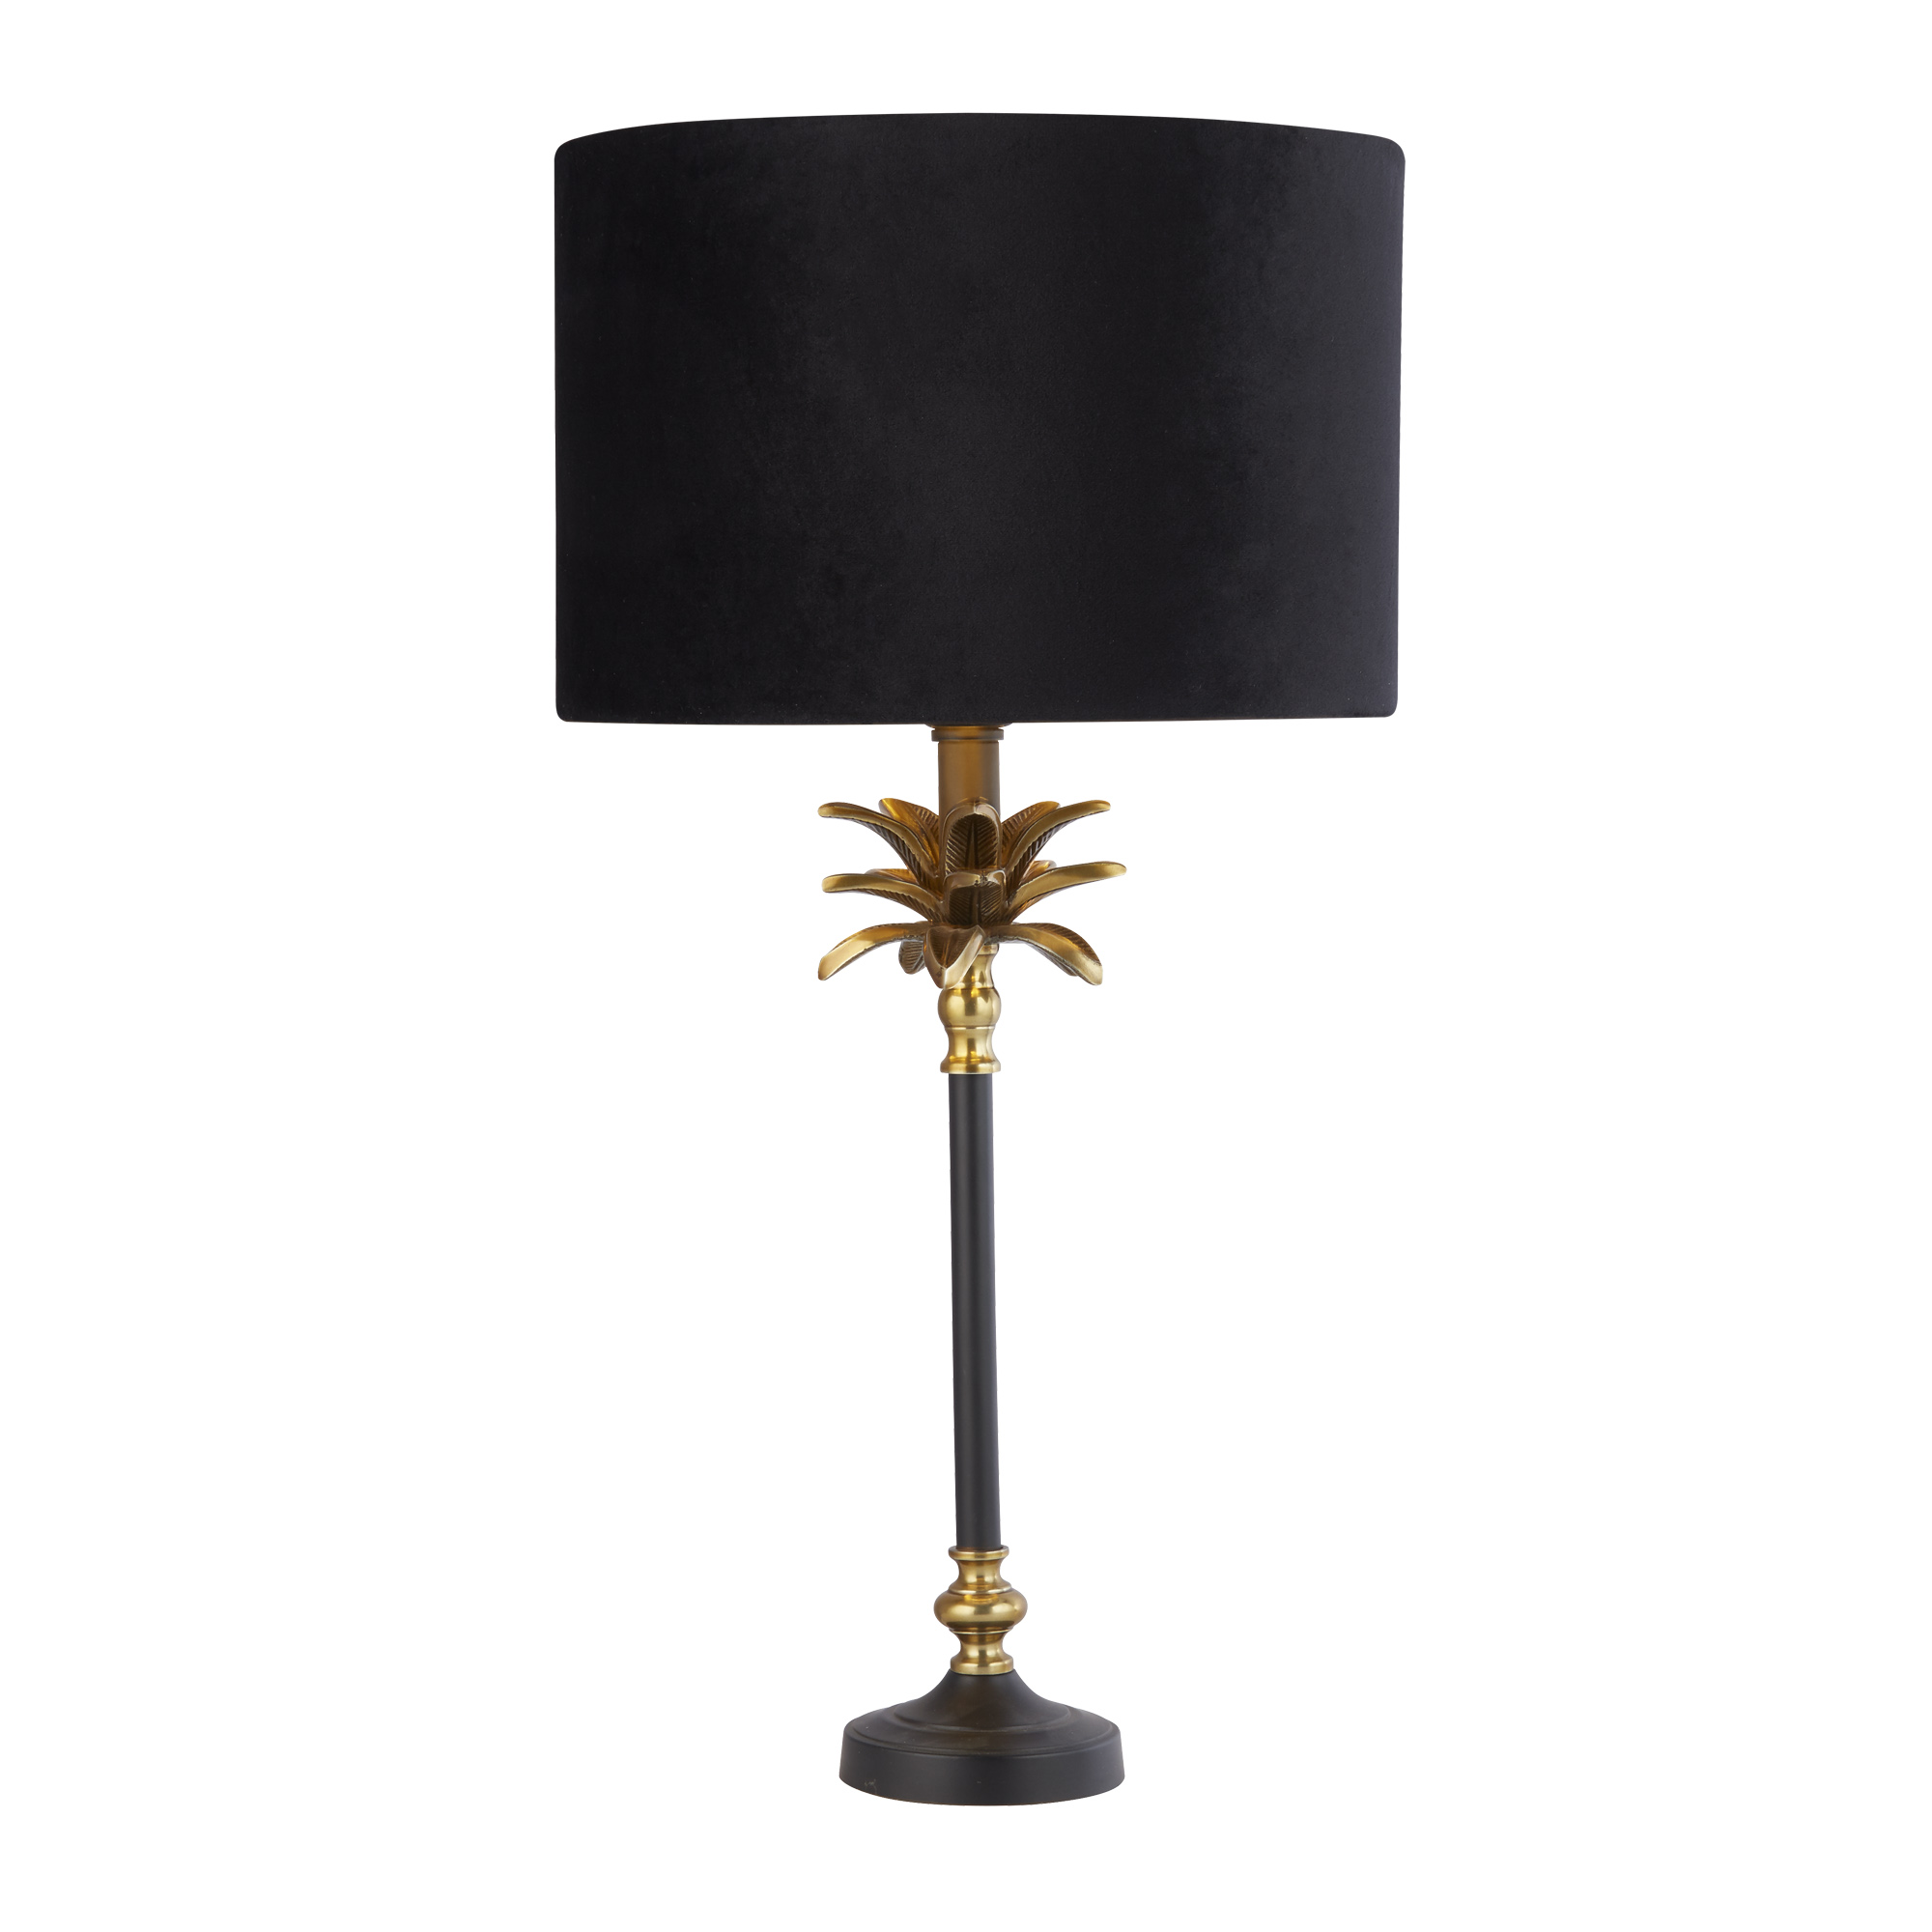 Palm Table Lamp - Black & Antique Brass Metal,Black Shade